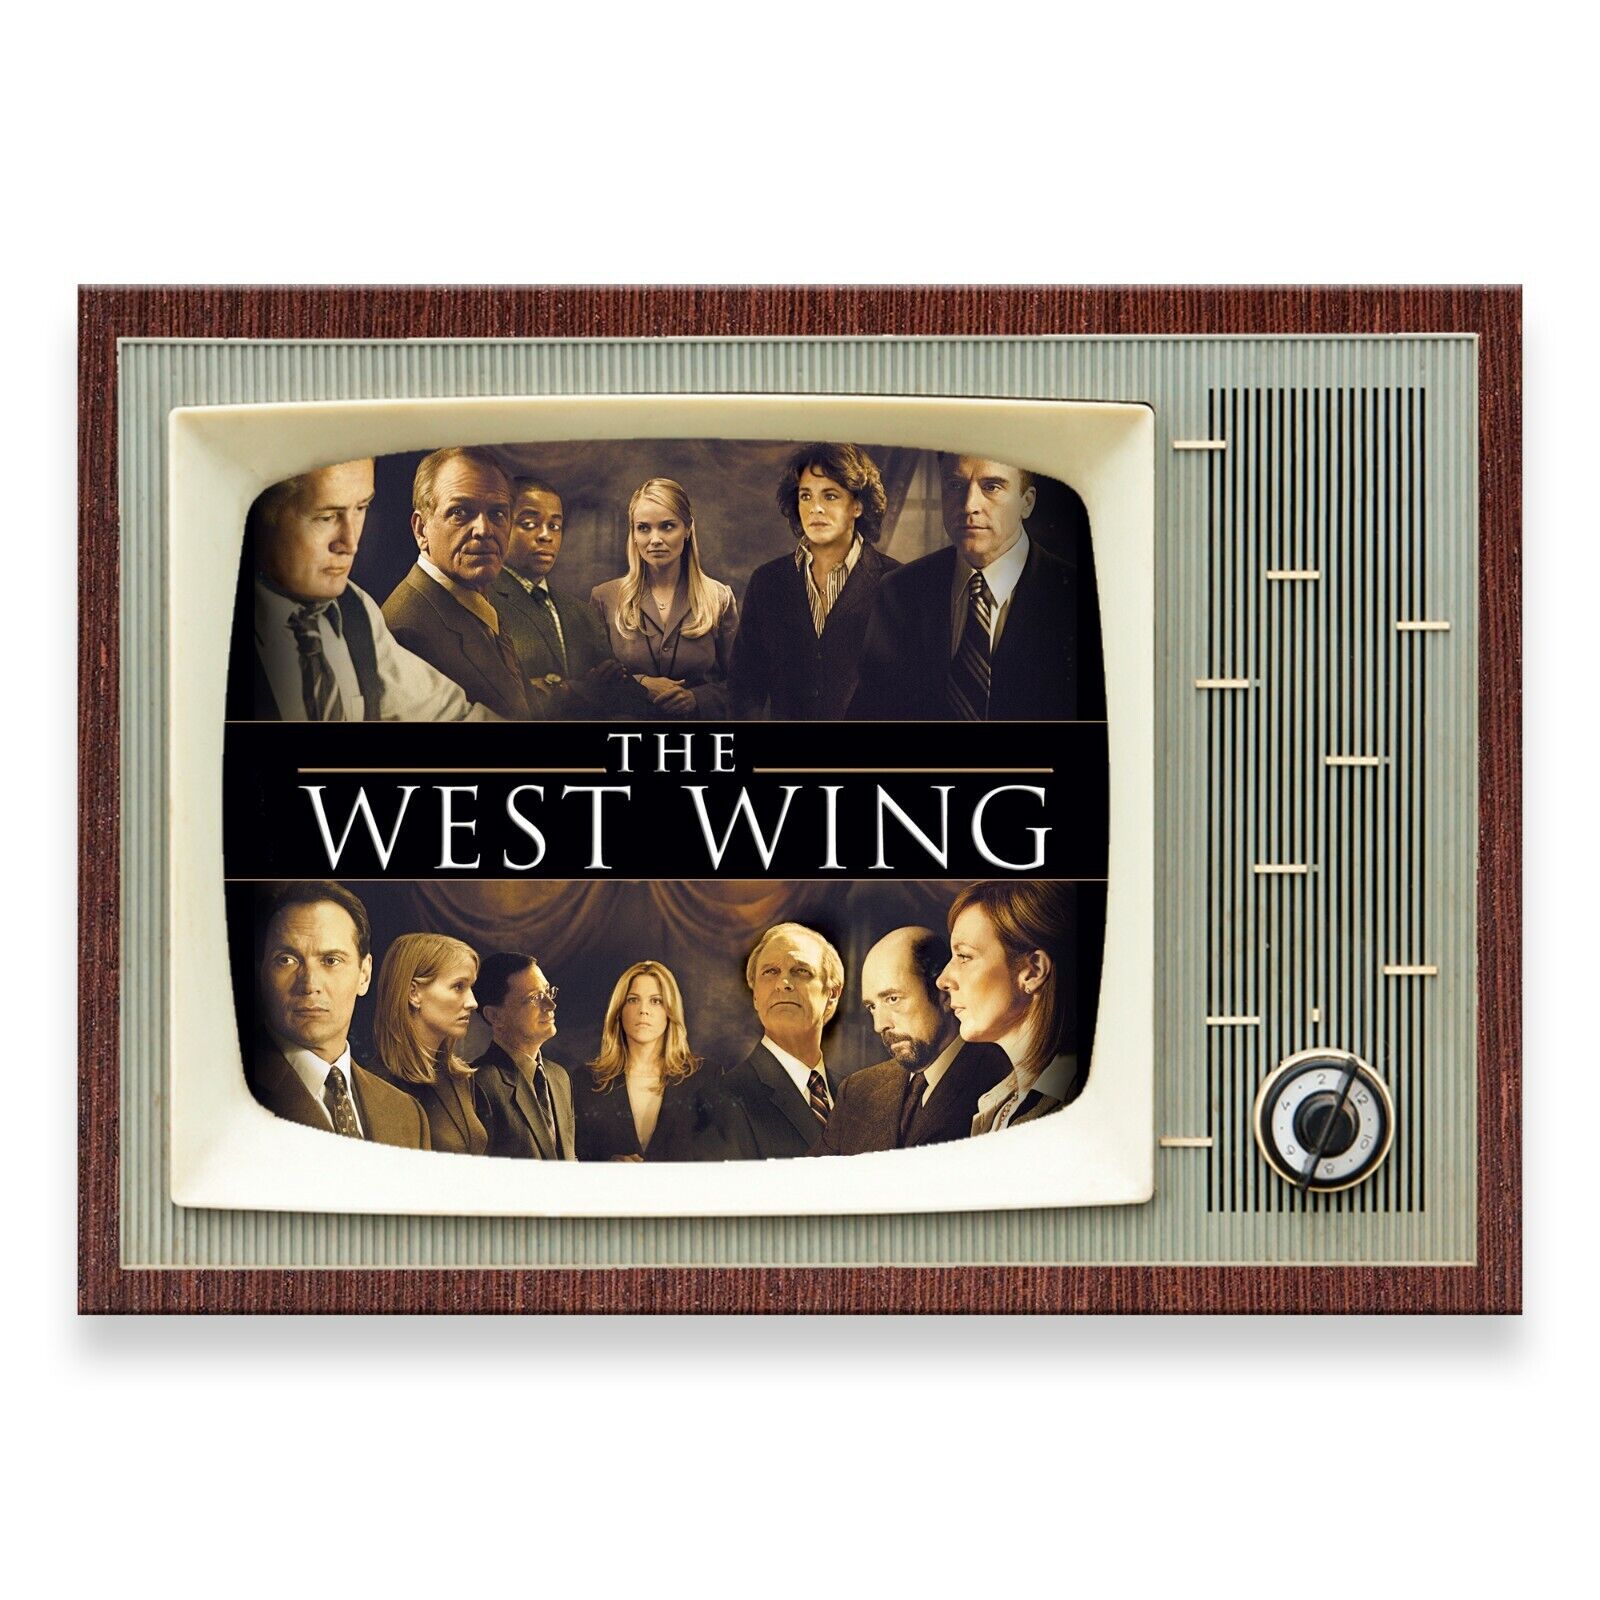 THE WEST WING Retro TV Design 3.5 inches x 2.5 inches FRIDGE MAGNET 